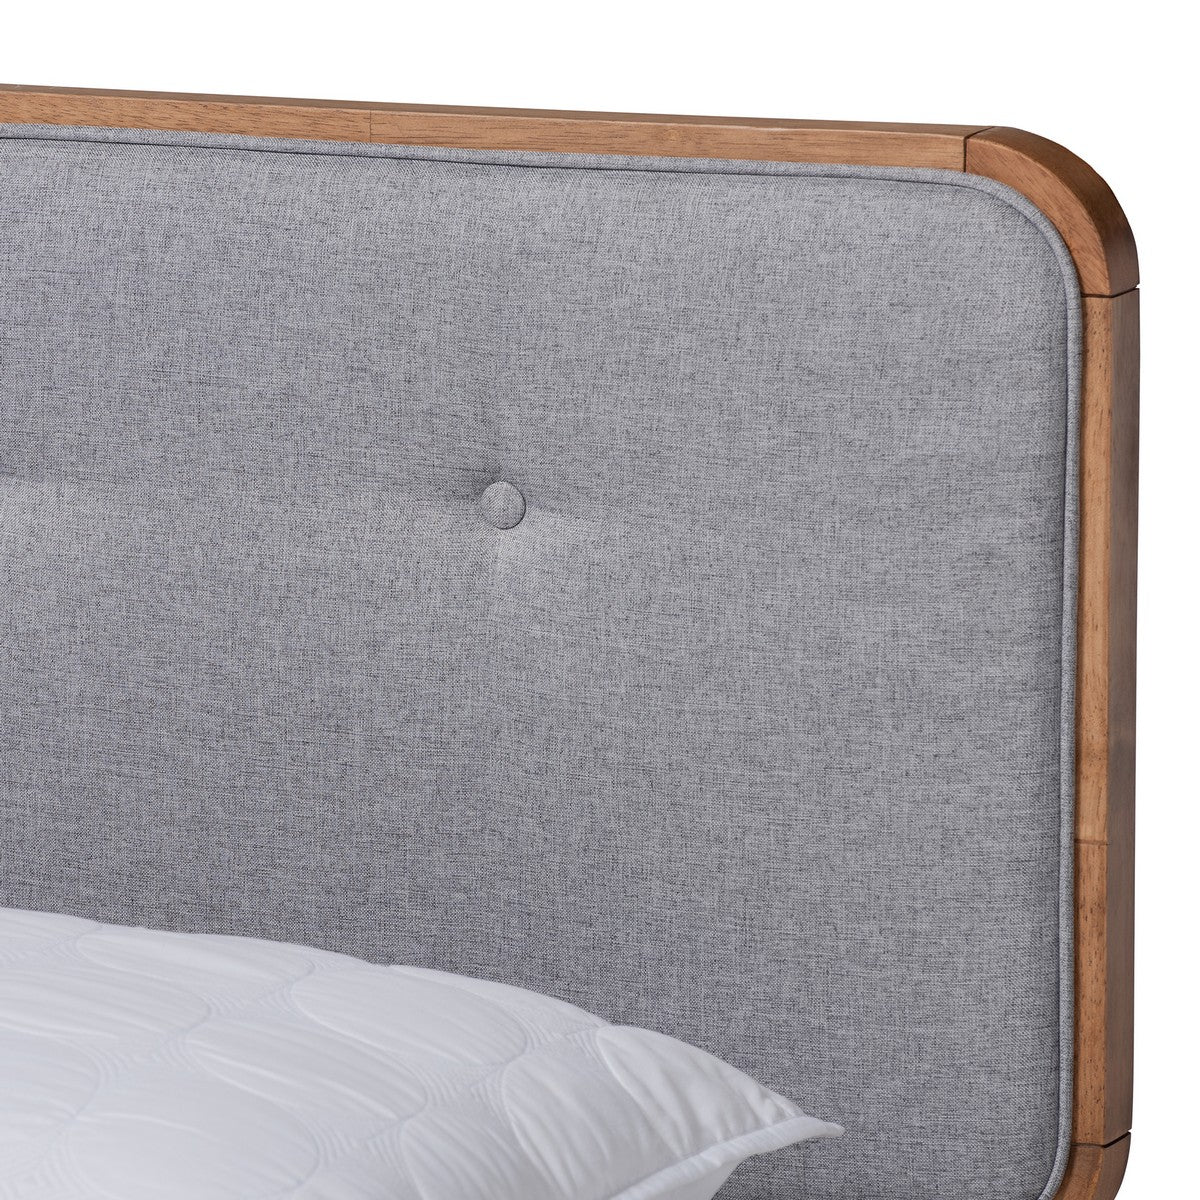 Baxton Studio Sofia Mid-Century Modern Light Grey Fabric Upholstered and Ash Walnut Finished Wood King Size Platform Bed